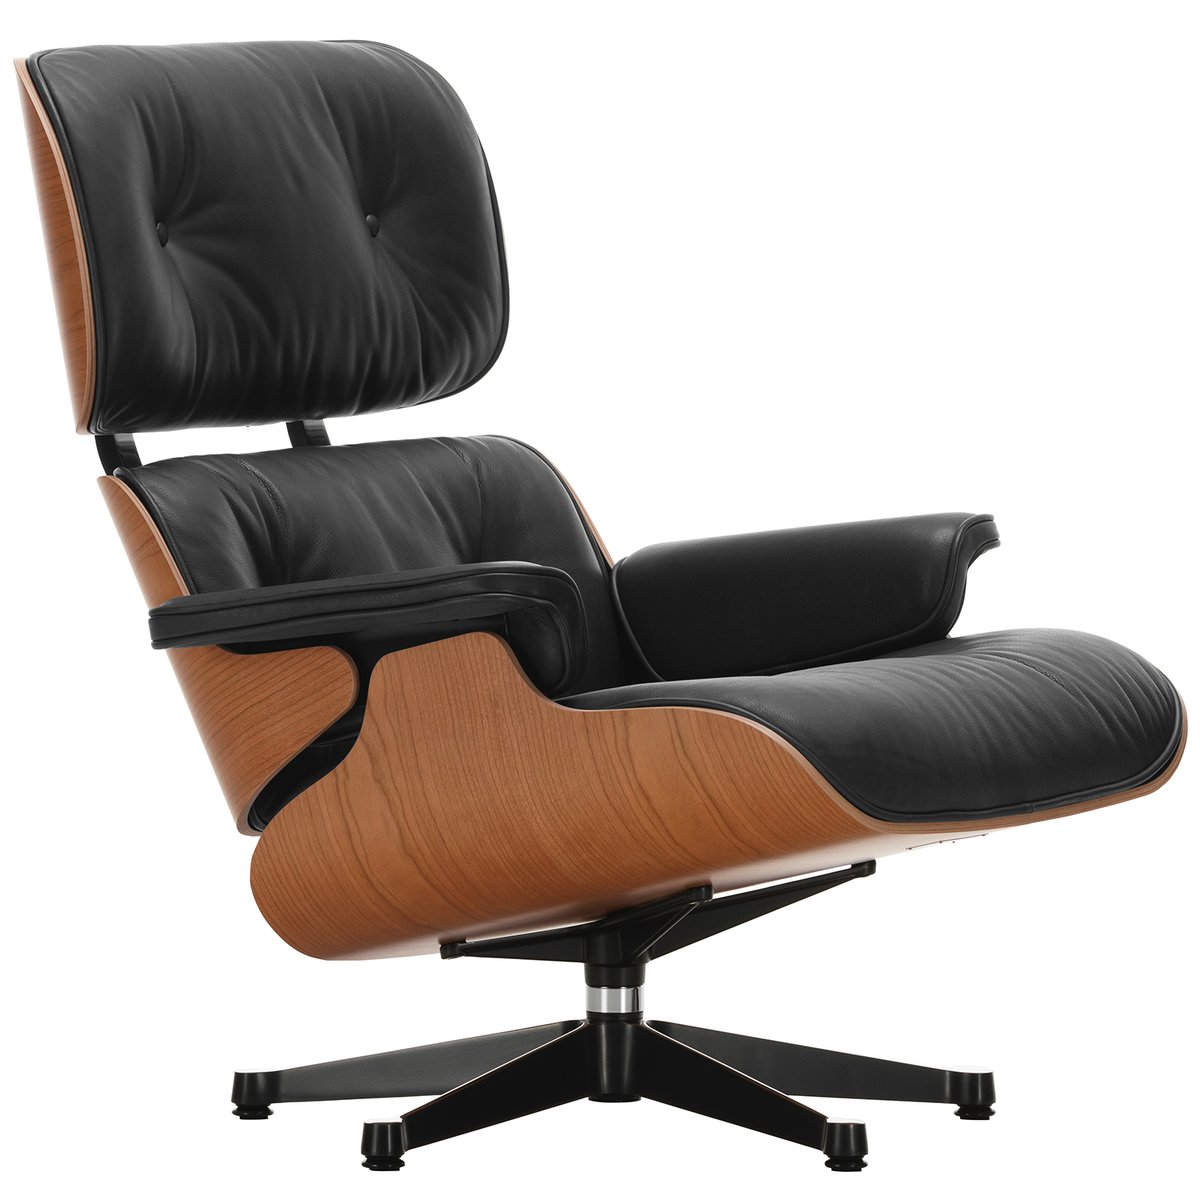 Vitra Eames Lounge Chair Classic Size American Cherry Black Leathe Finnish Design Shop